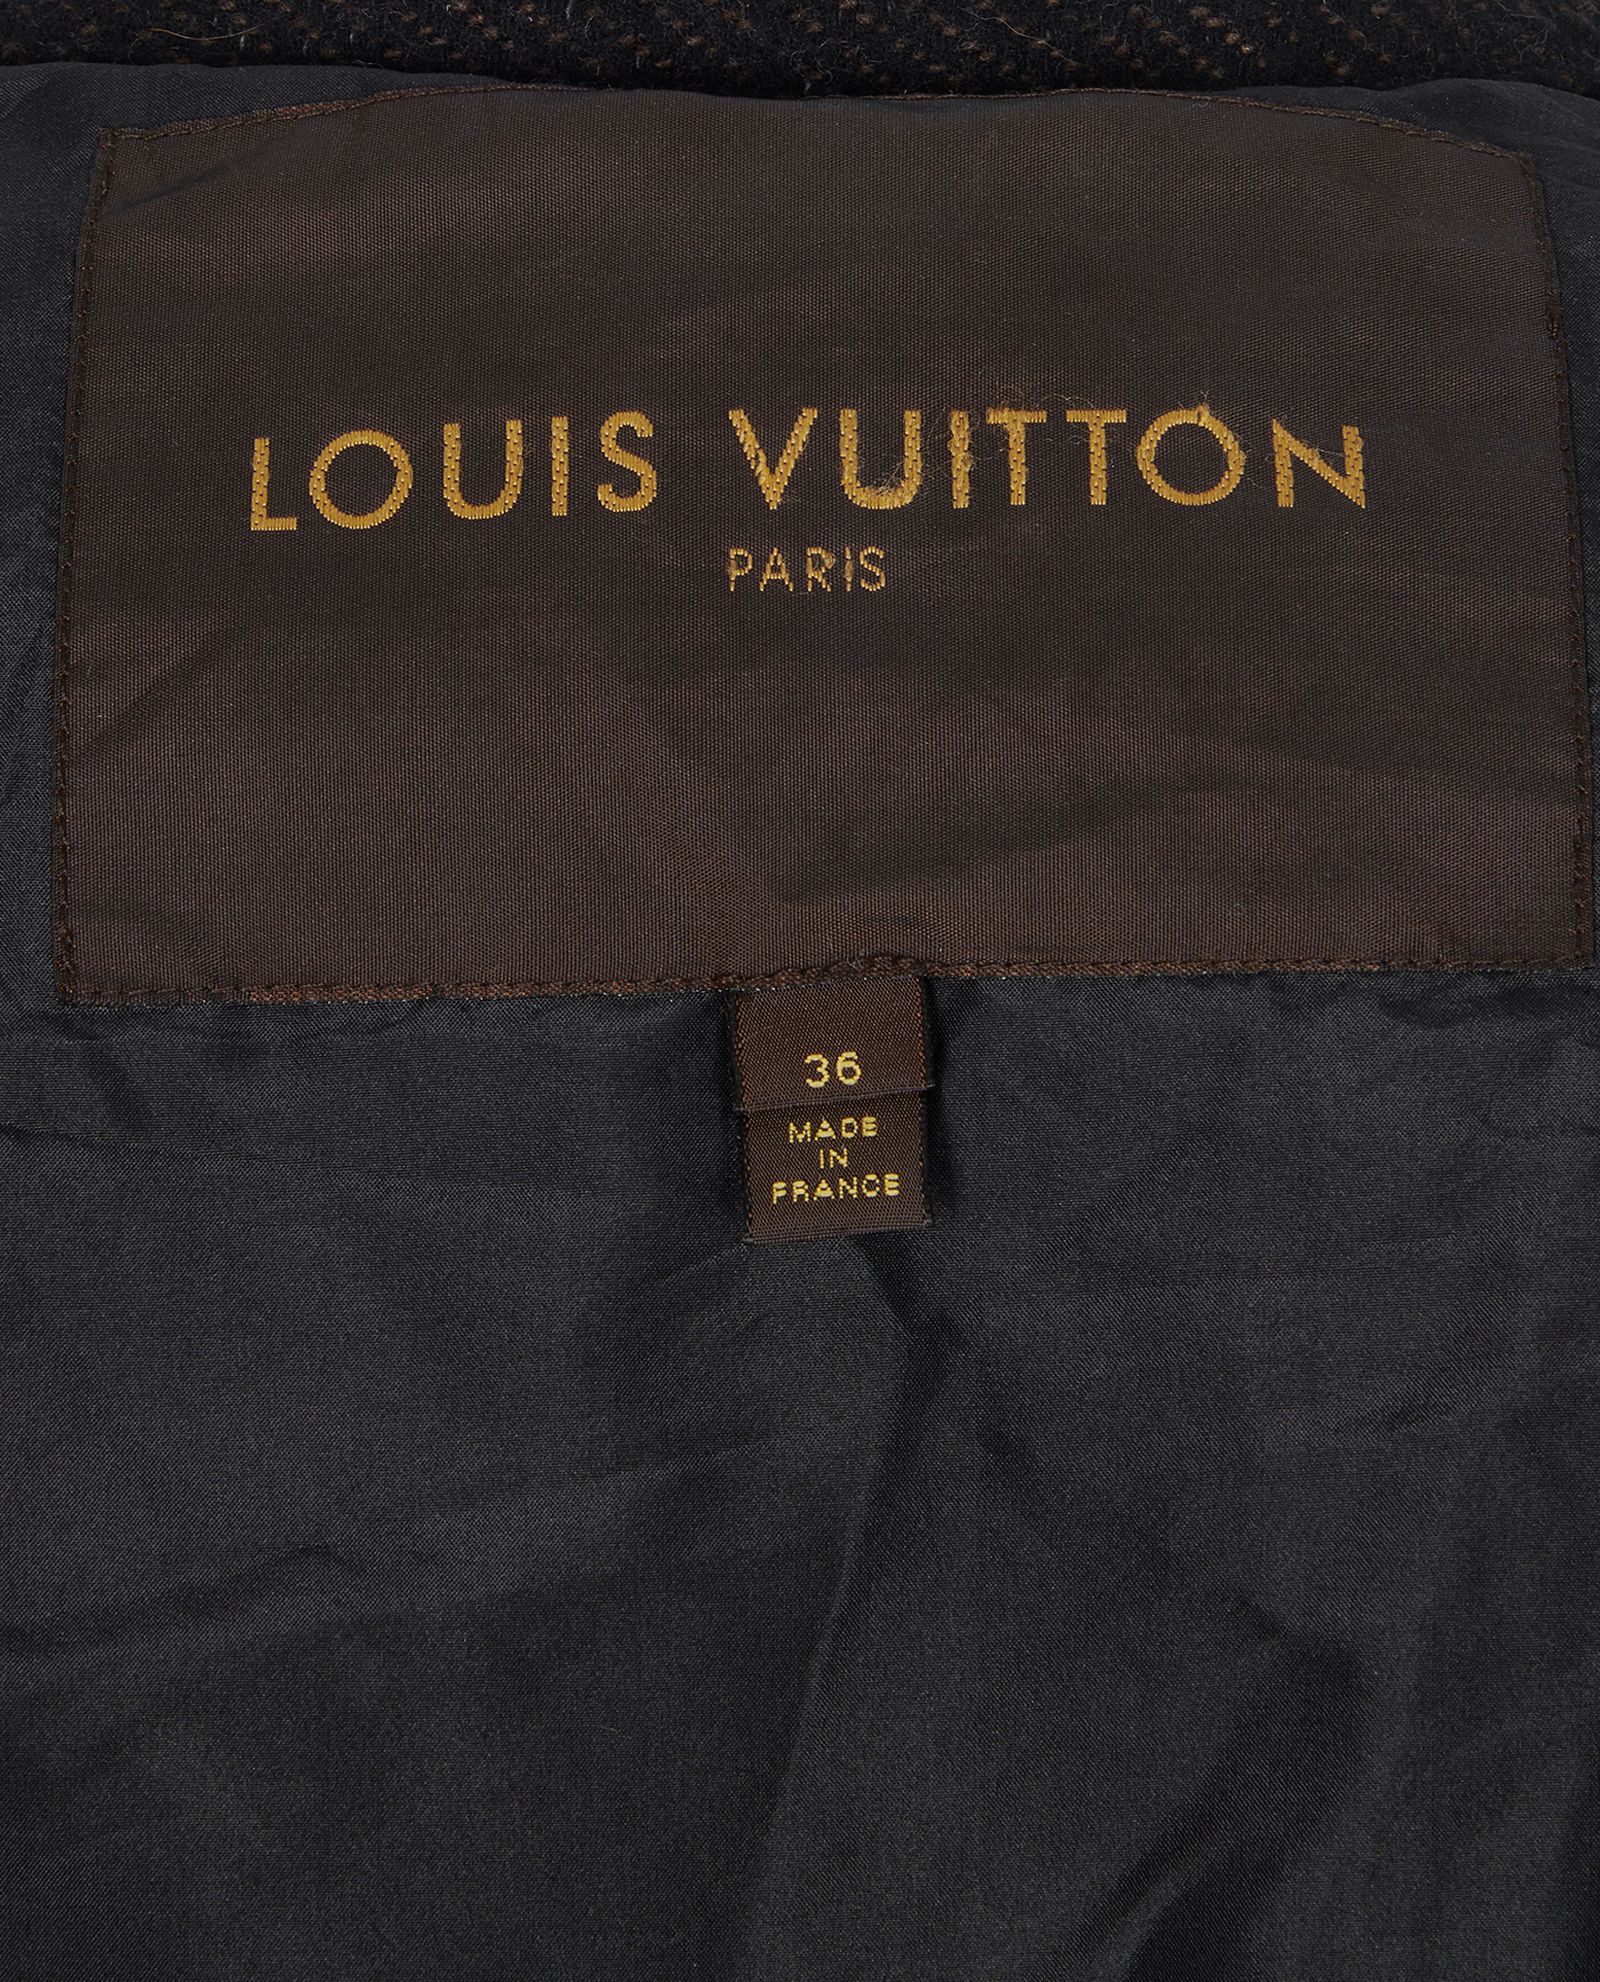 Louis Vuitton Black White Blanket • Kybershop